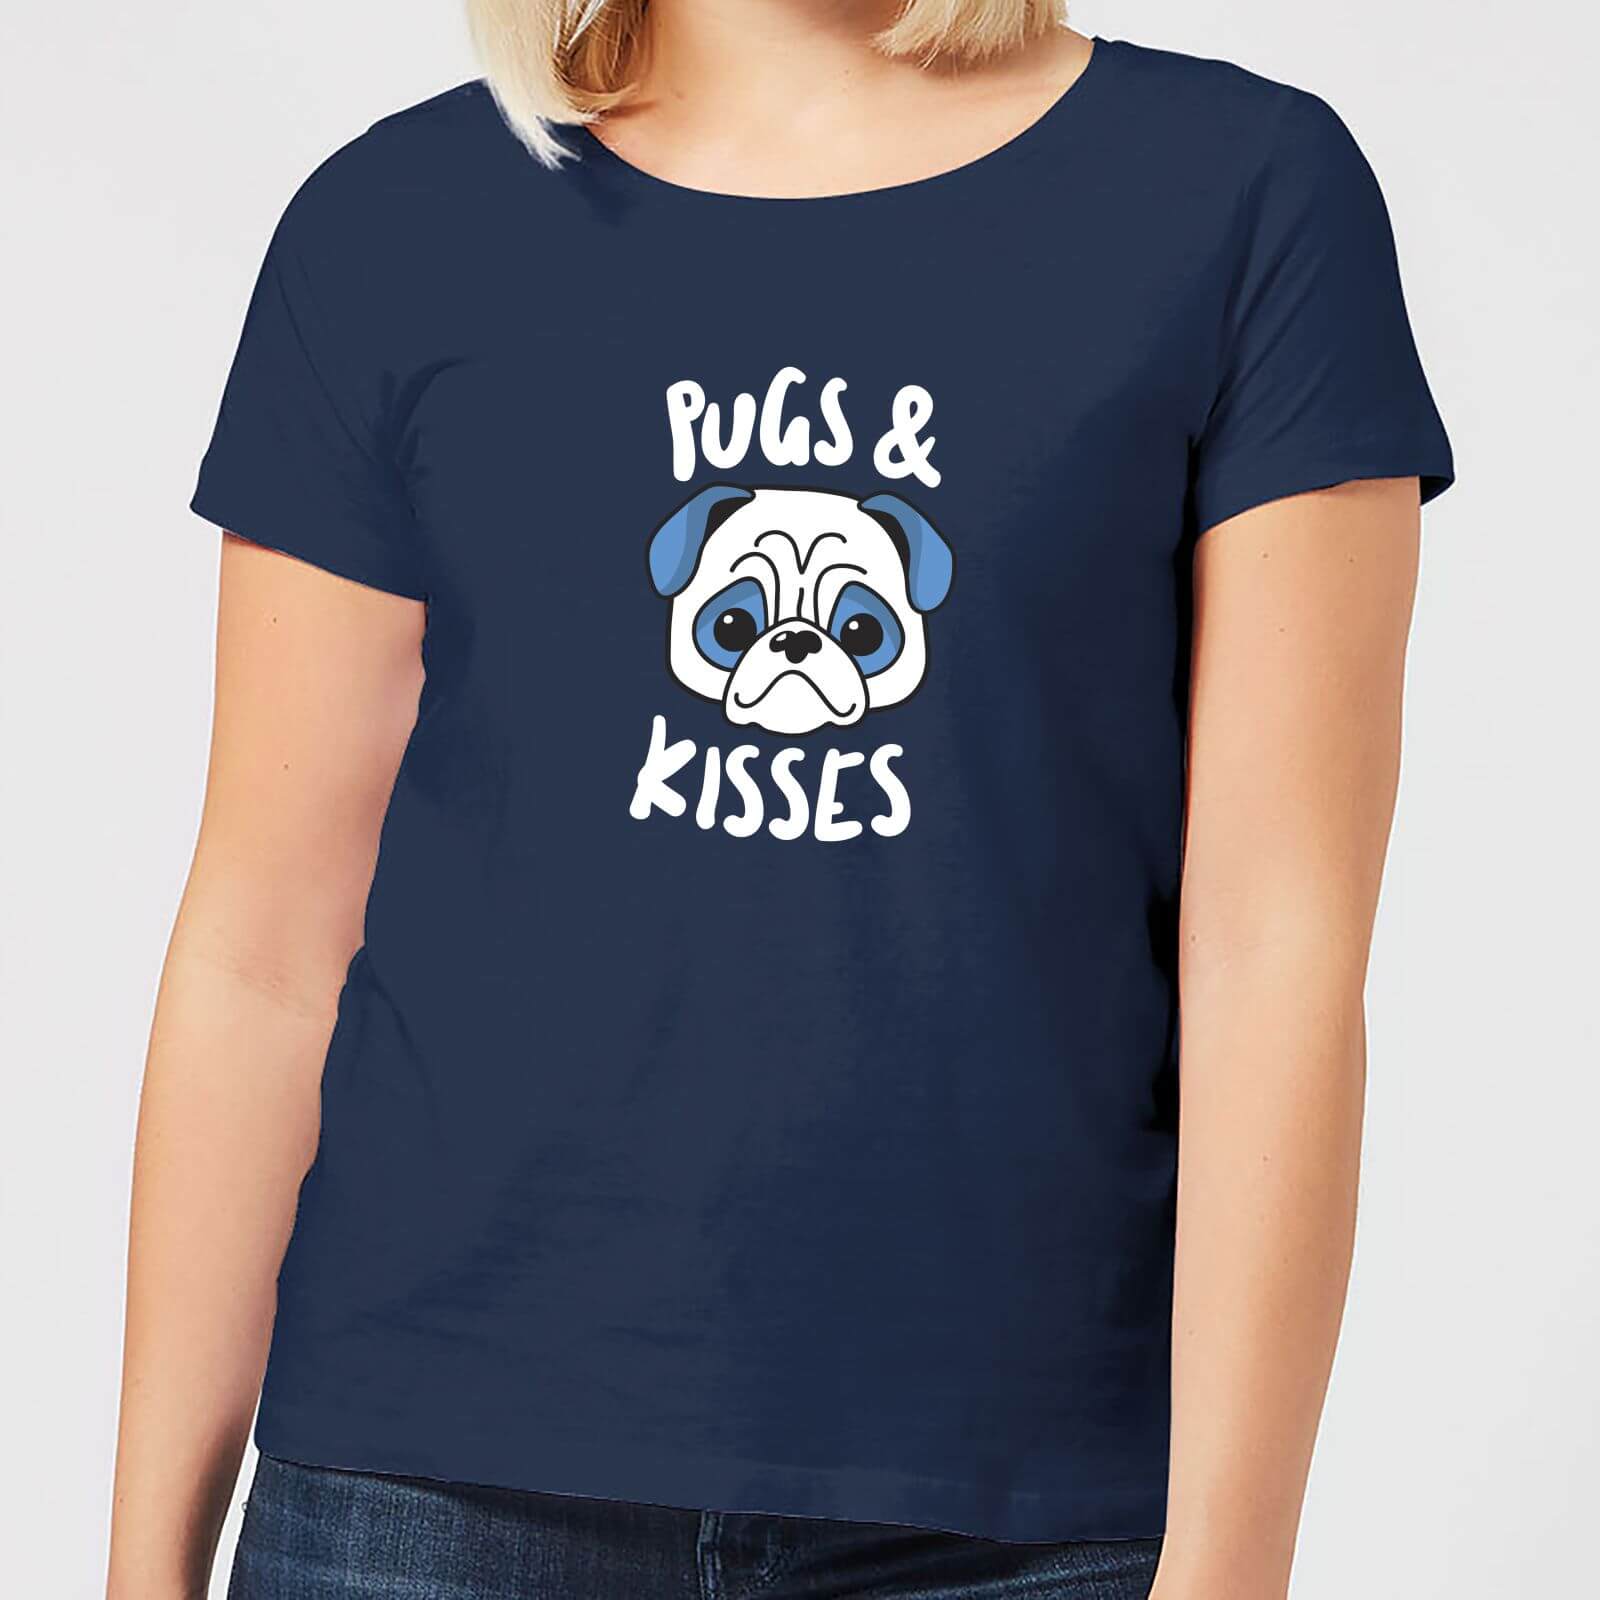 Pugs & Kisses Women's T-Shirt - Navy - S - Navy